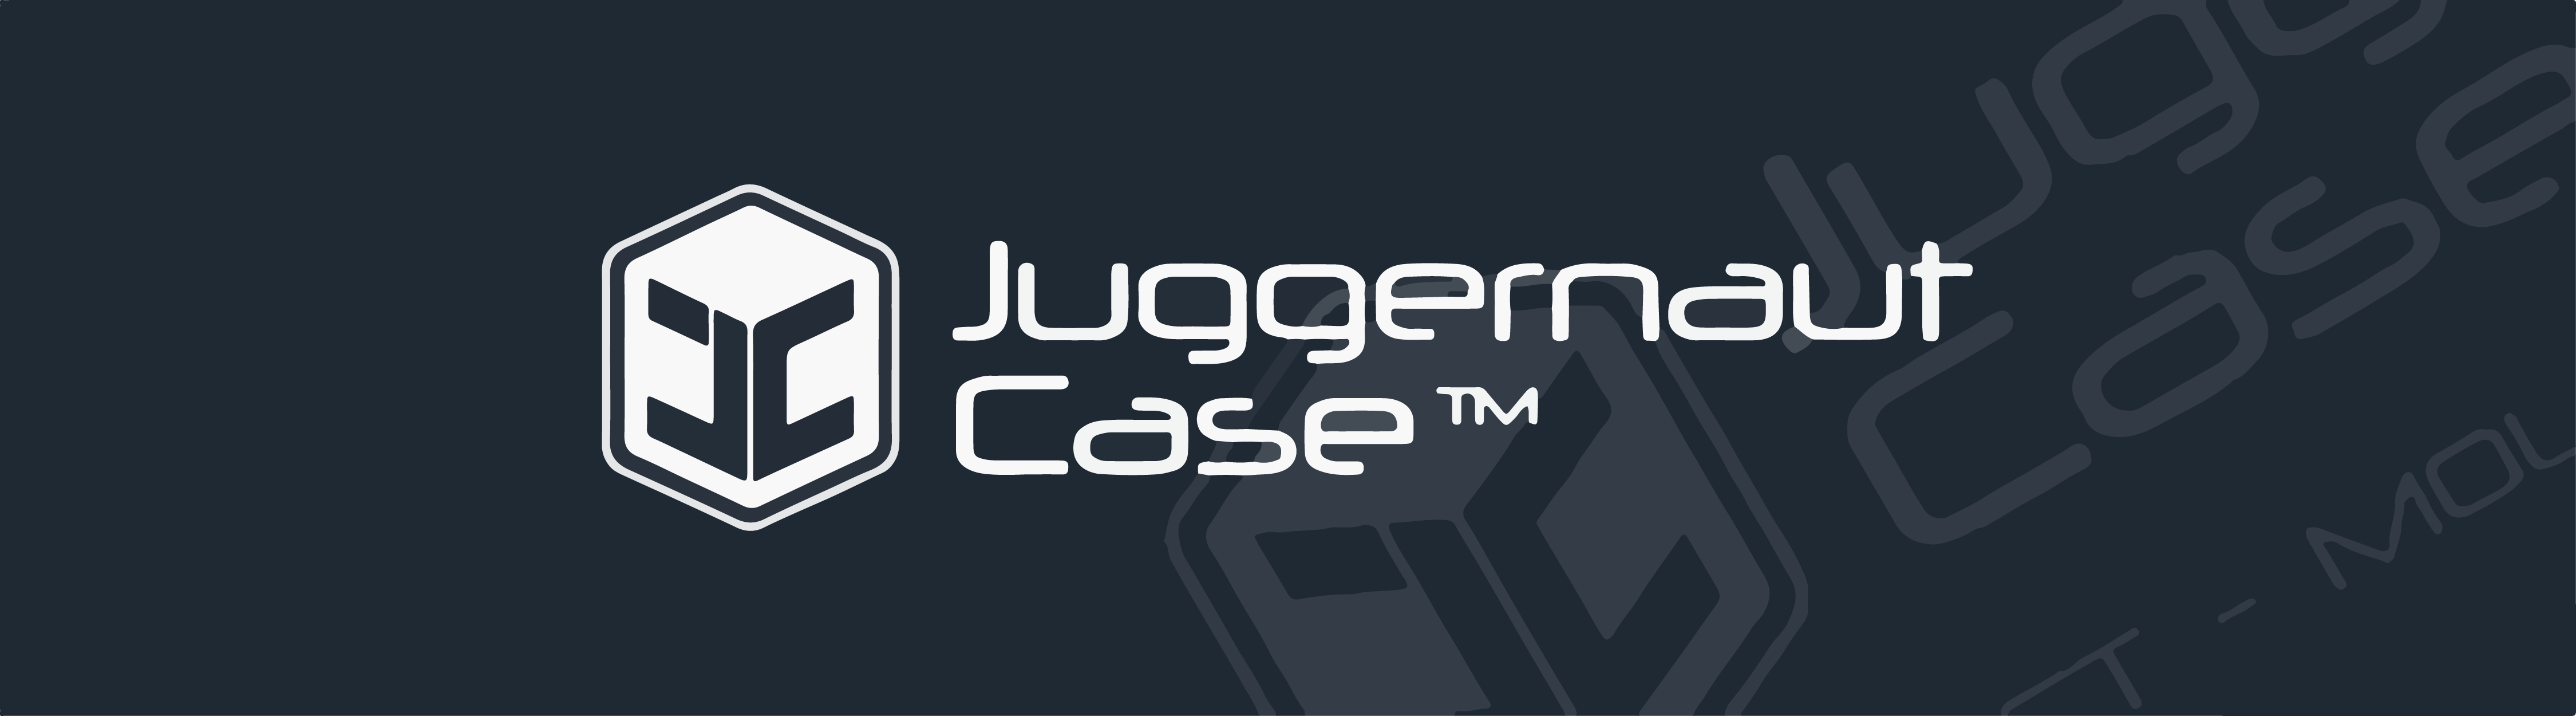 Juggernaut Case